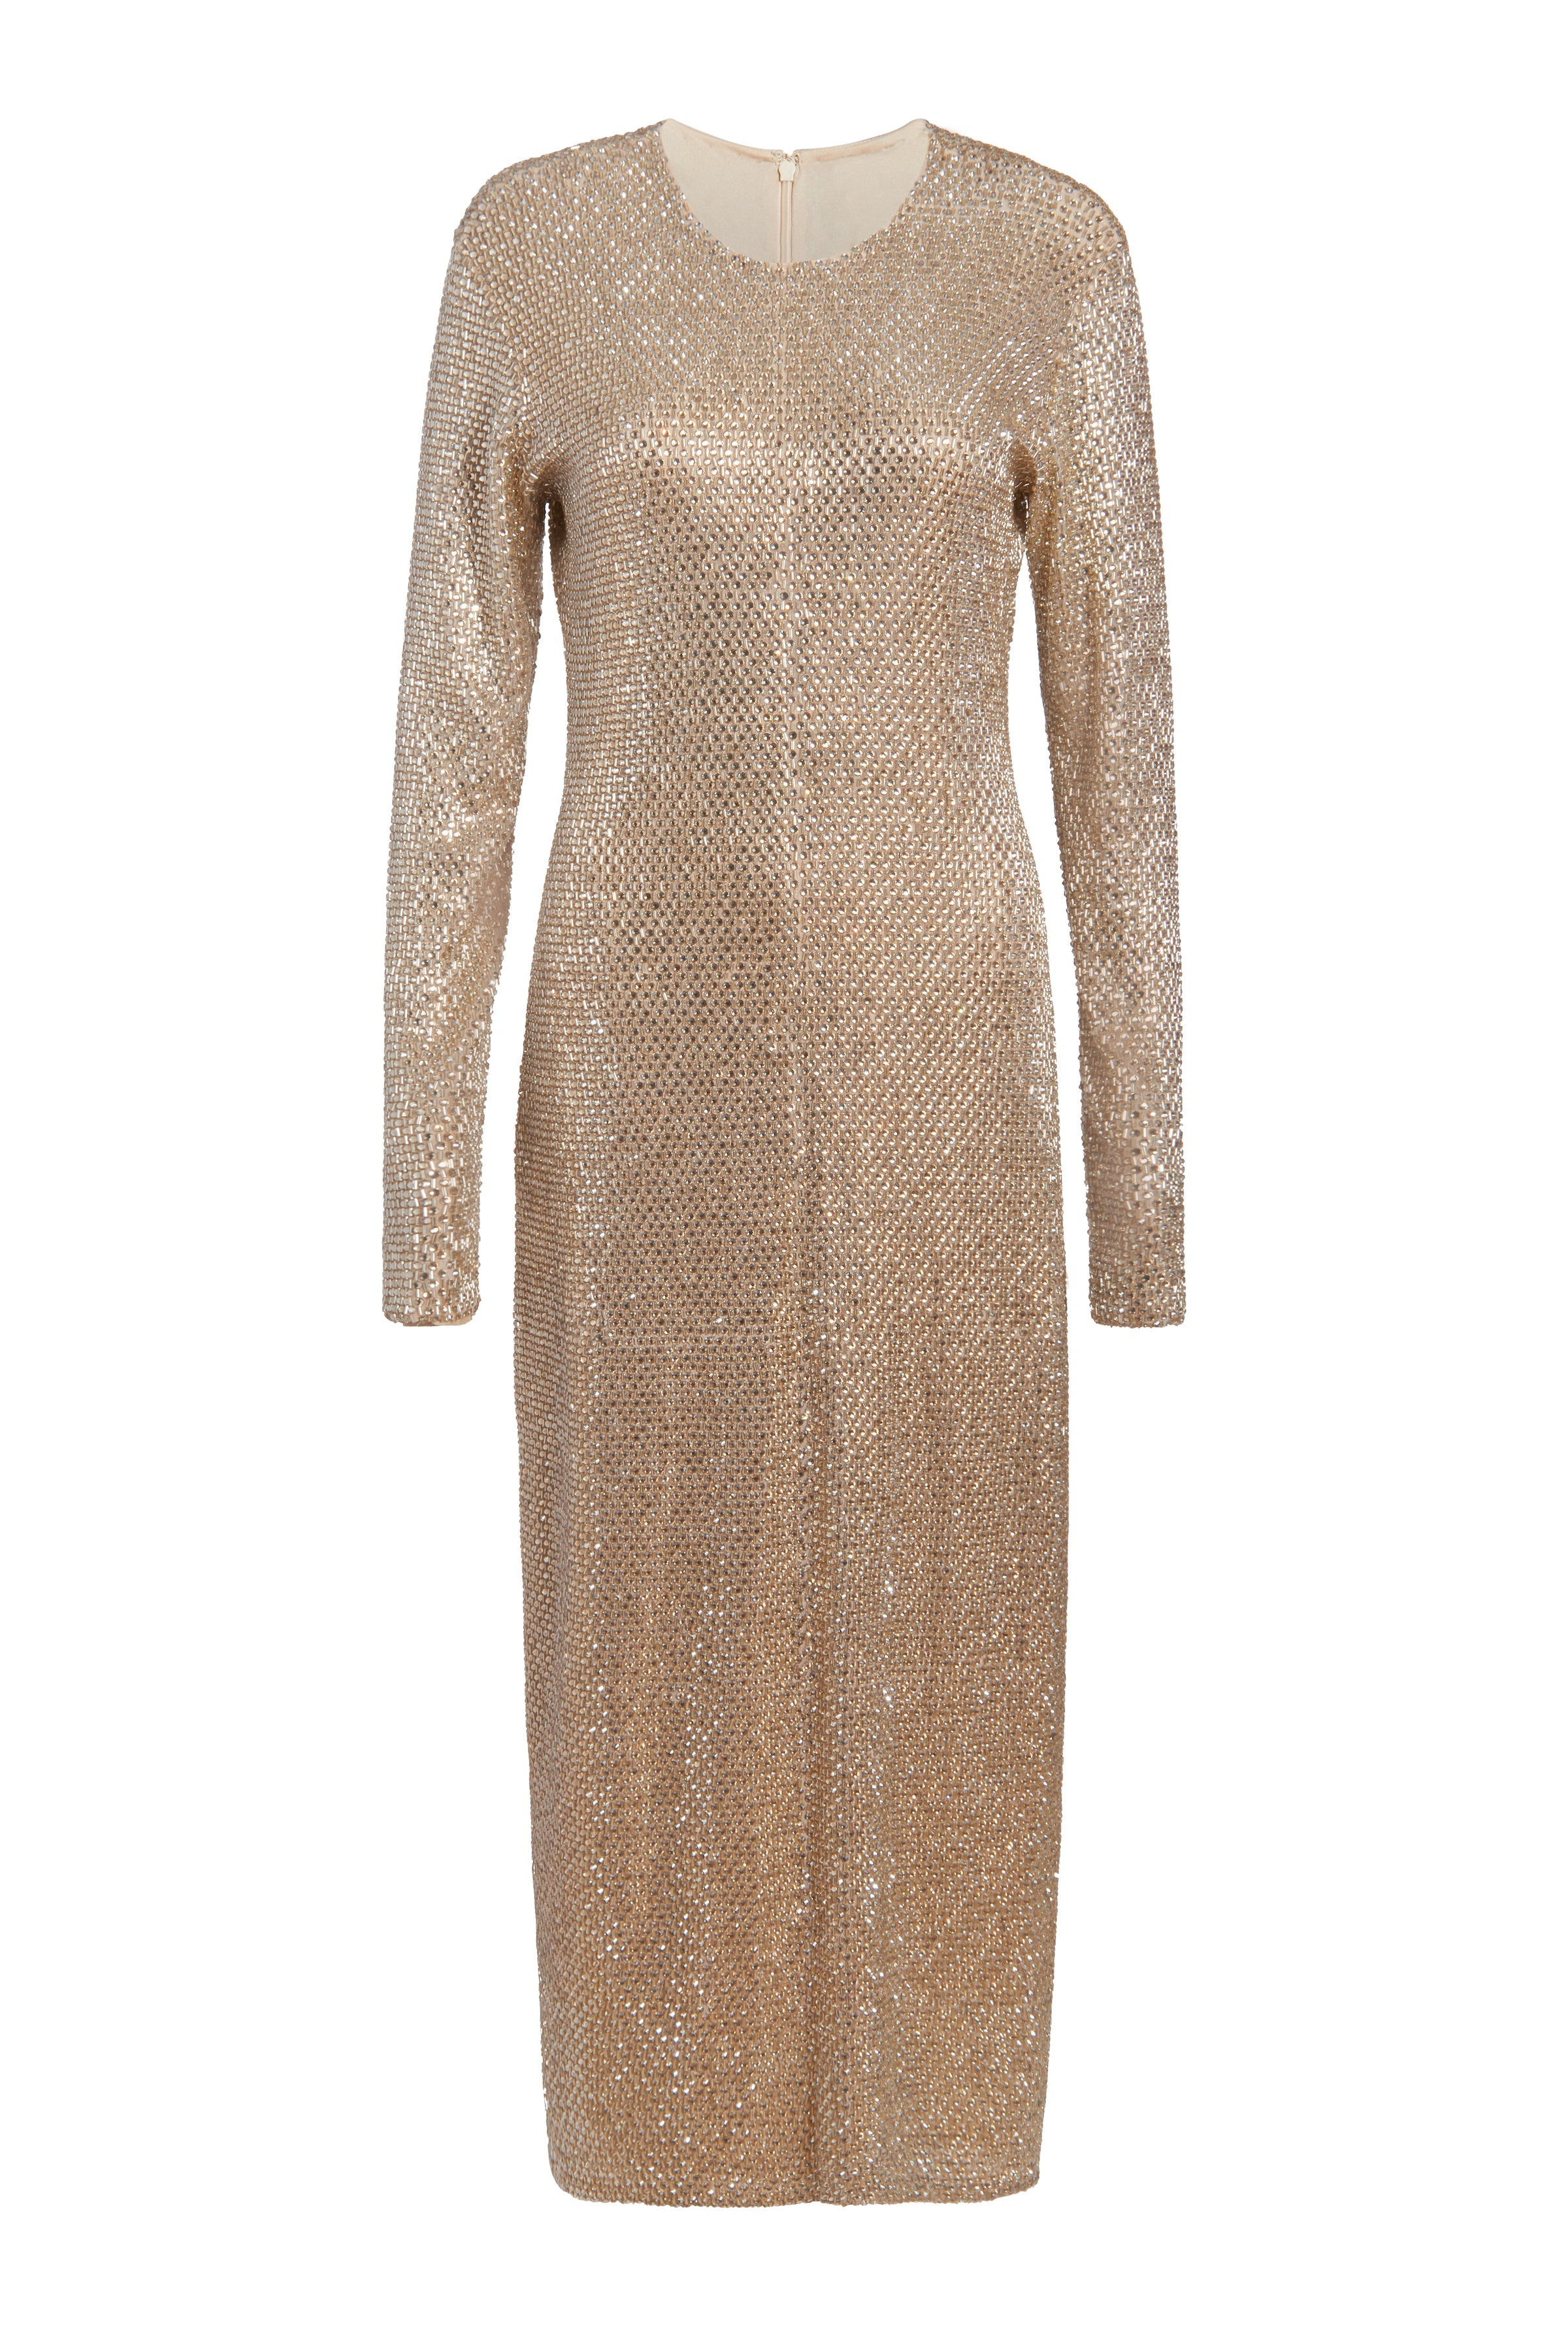 Oasis Gold Crystal Long Sleeve Midi Dress